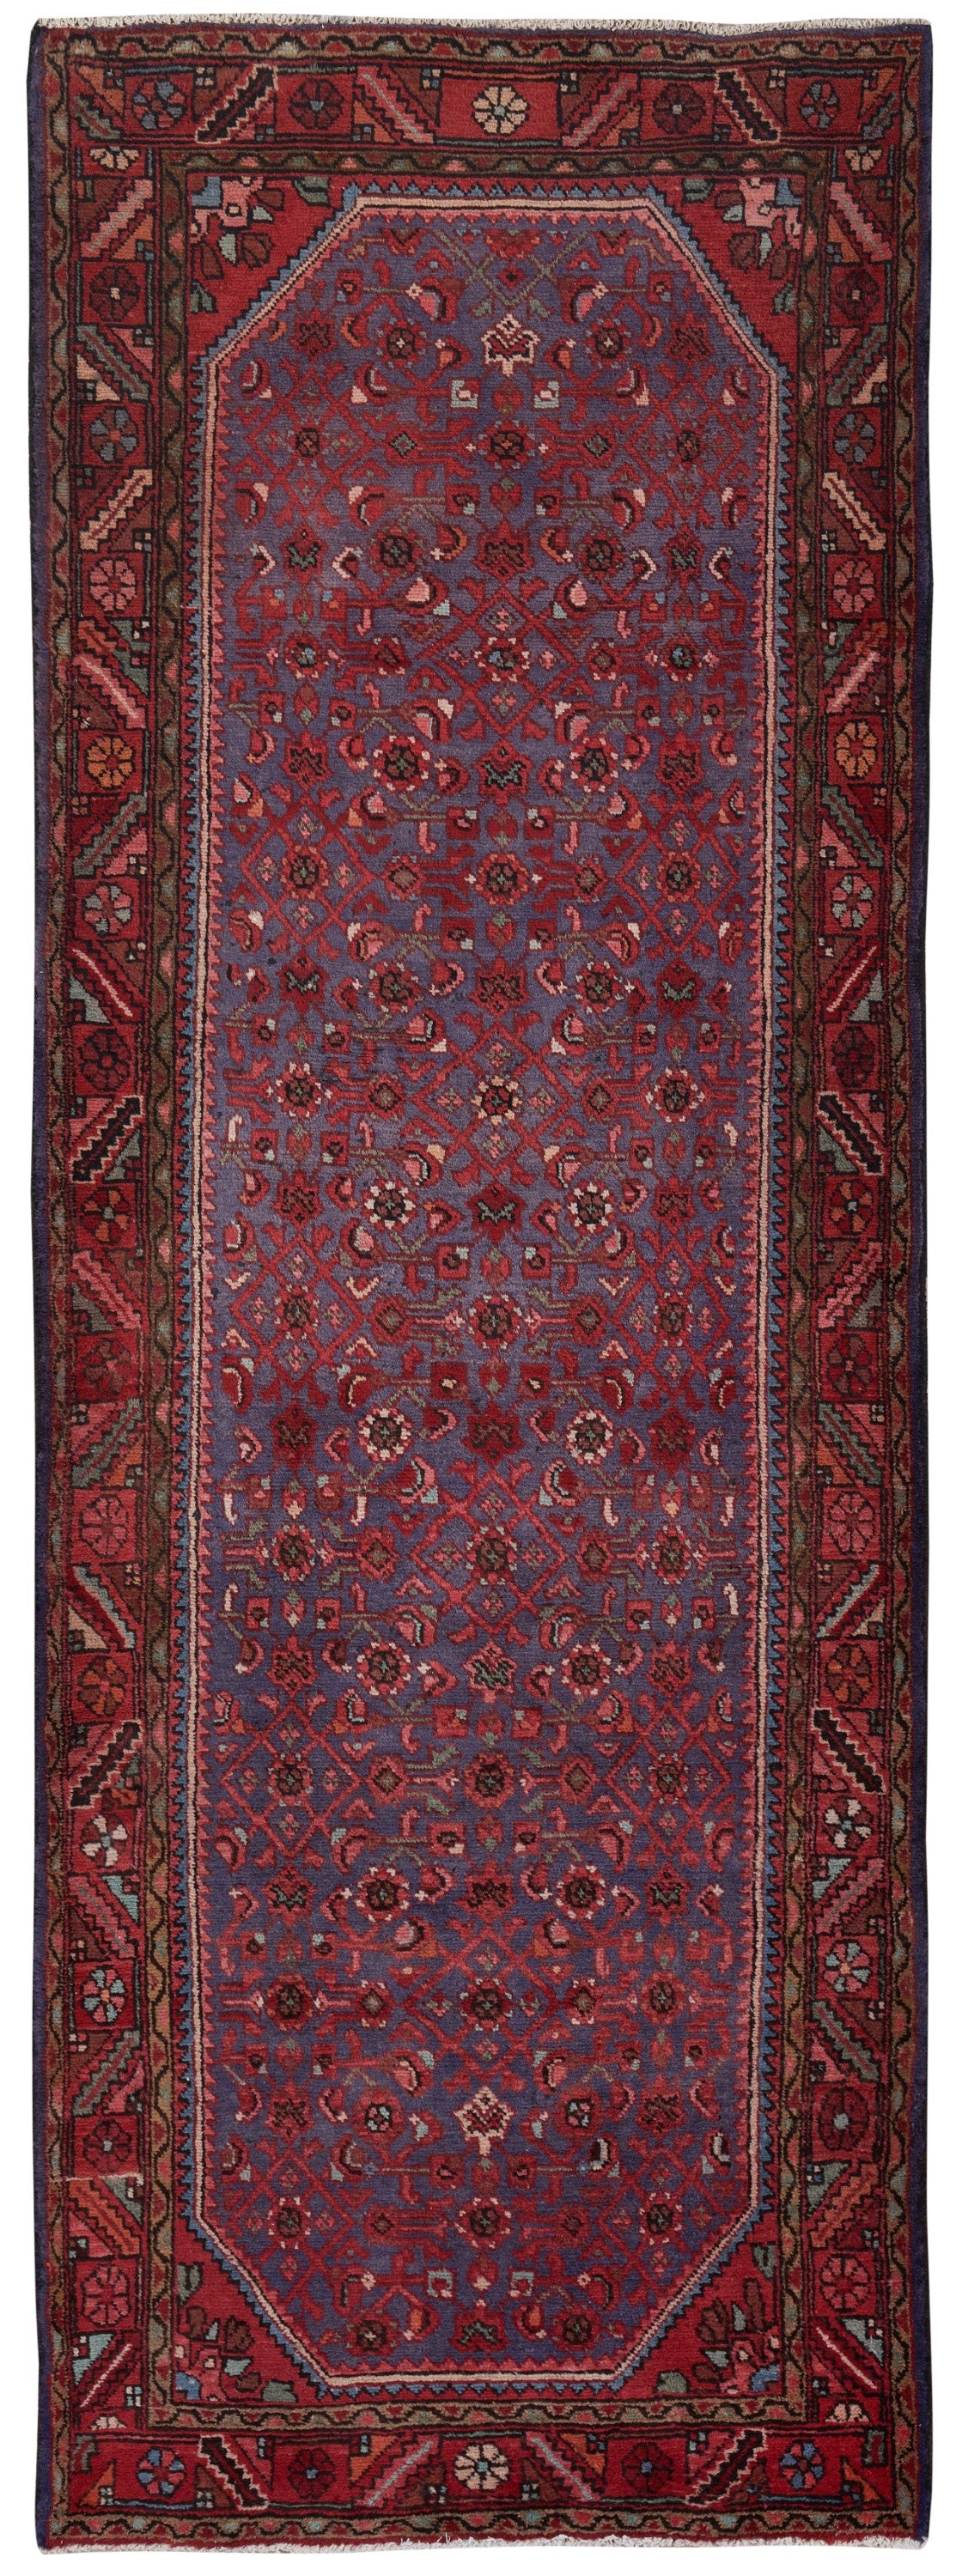 Vintage Red Runner Rug, Traditional Turkmen Extra Long Kitchen Bathroom Rugs,  3x12 Runner Rug, Hallway Runner, Farmhouse Decor, Oriental Rug 